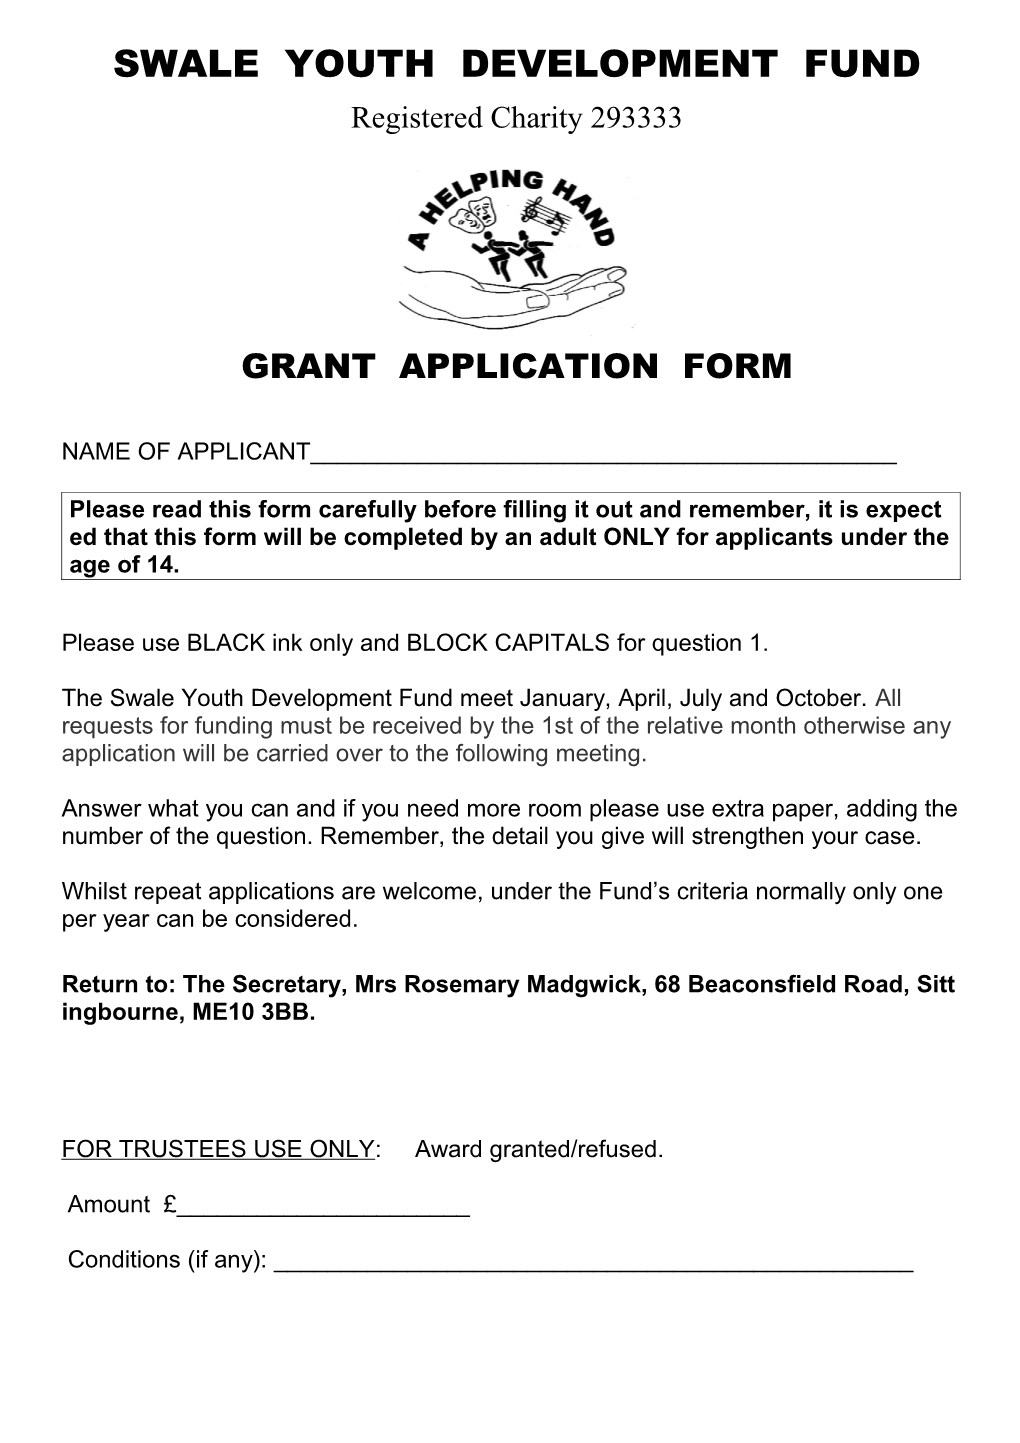 Swale Youth Development Fund